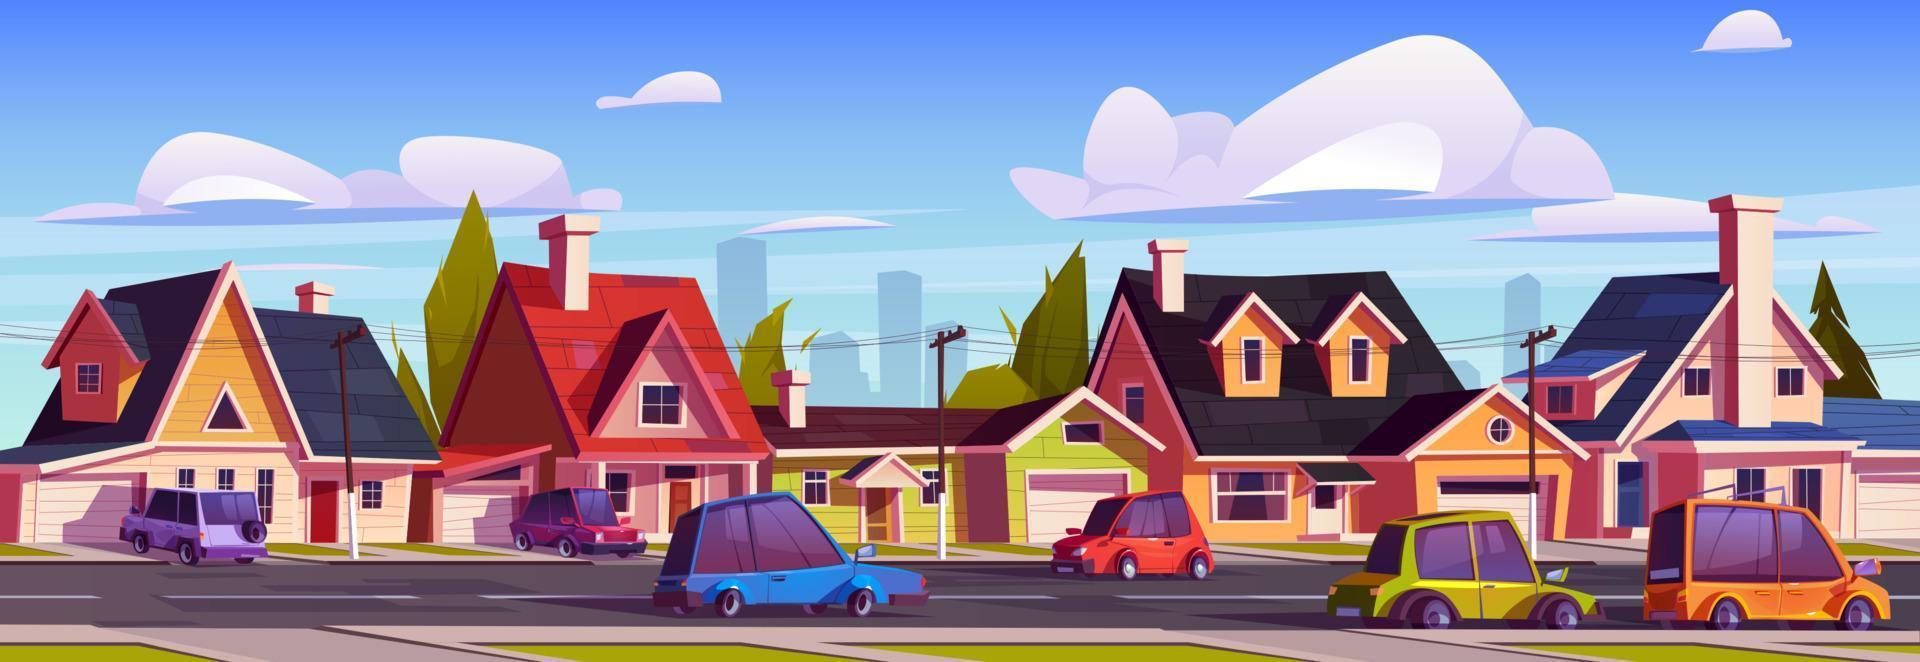 calle suburbana con casas y coches de conducción, vector